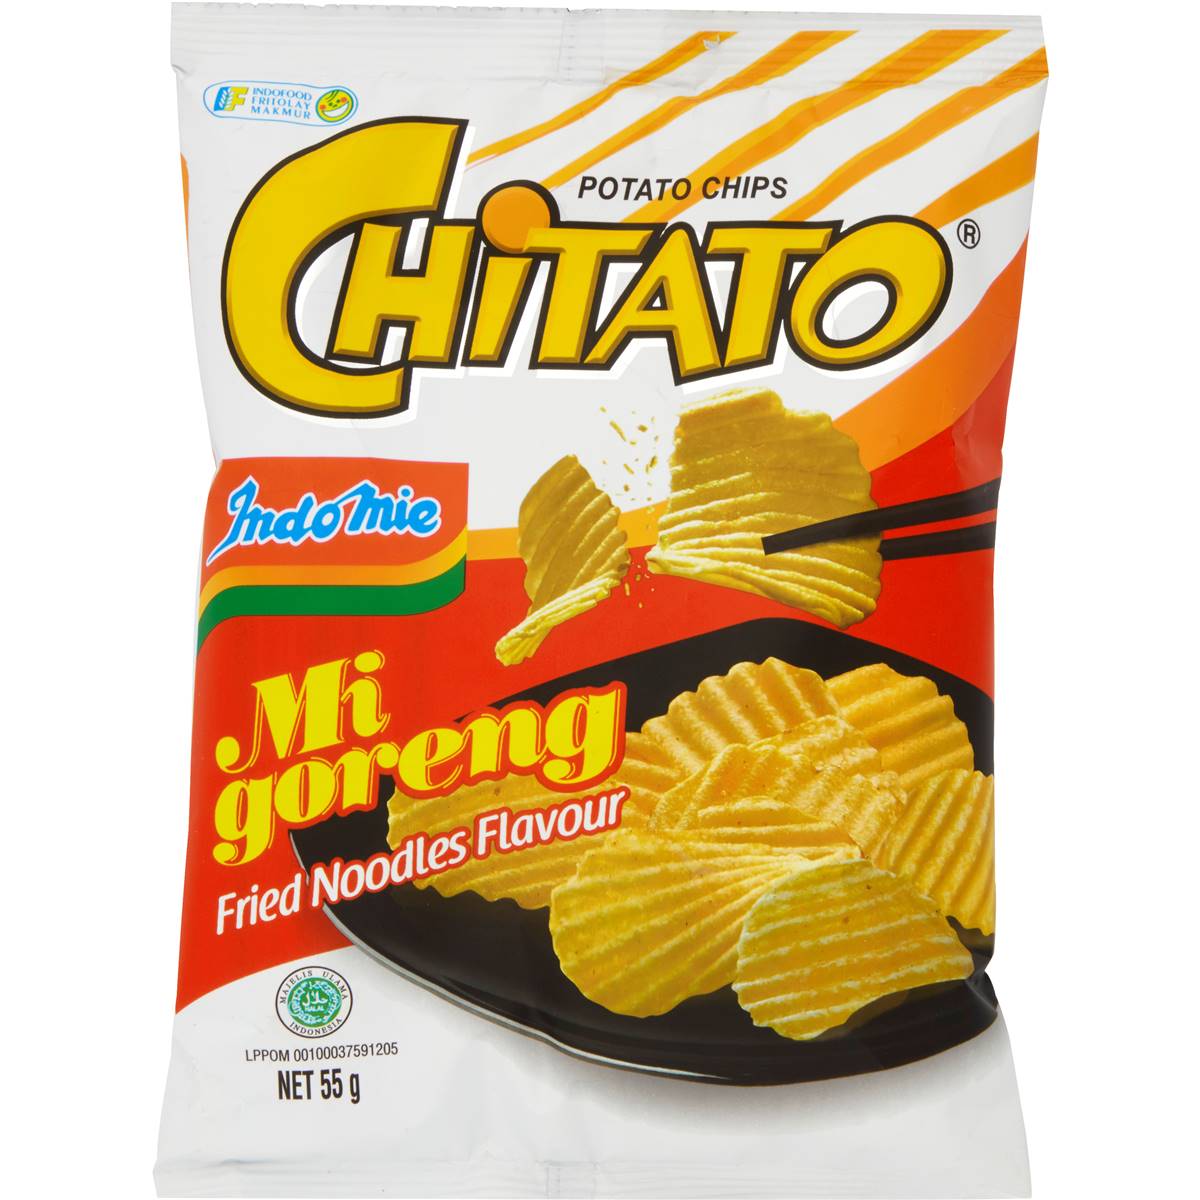 Chitato Potato Chips Crisps Mi Goreng Flavour 55g by Indomie